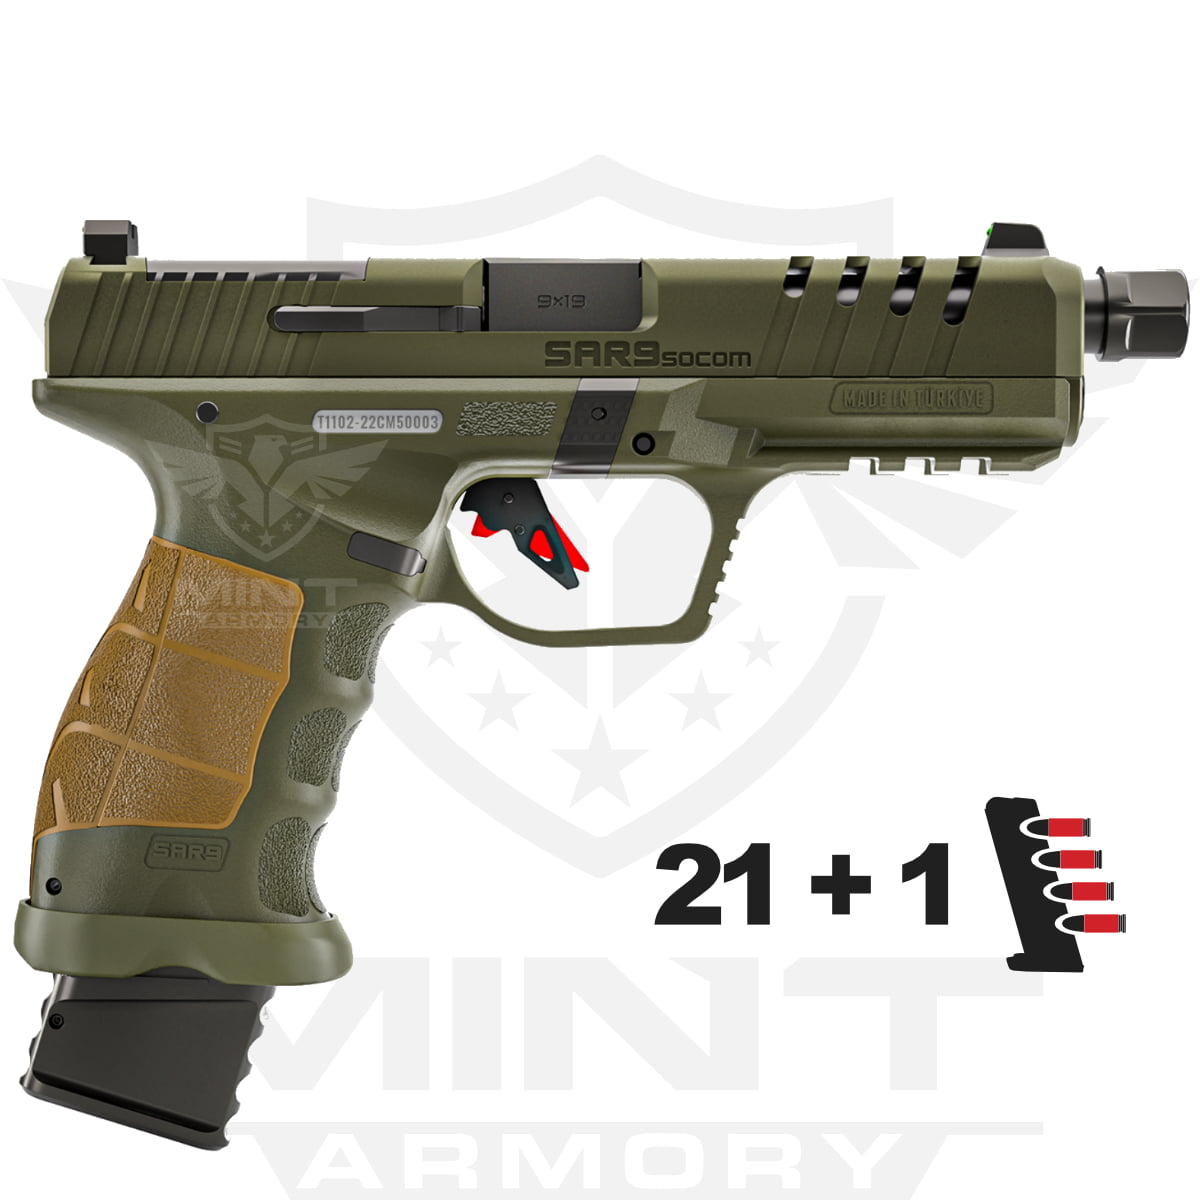 SAR9 SOCOM Od Green 21 Rounds 9mm Pistol